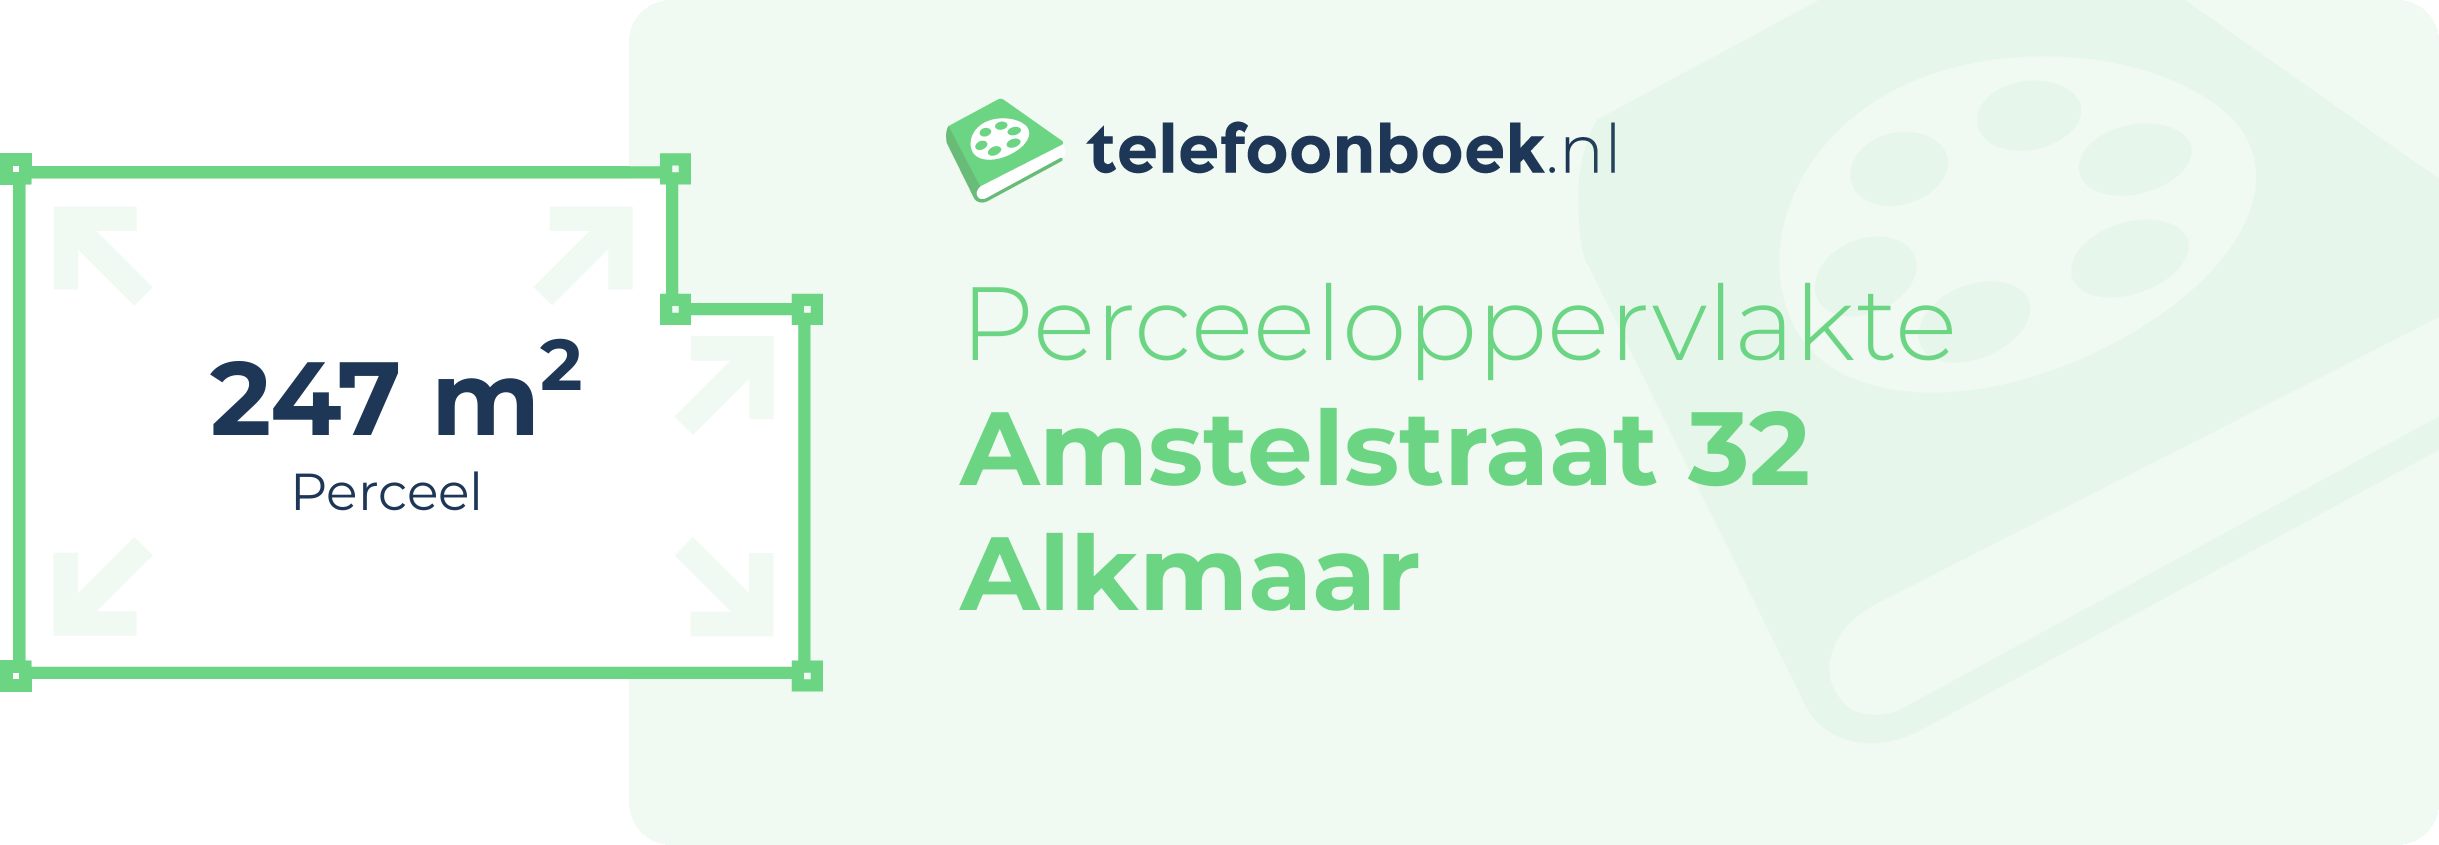 Perceeloppervlakte Amstelstraat 32 Alkmaar